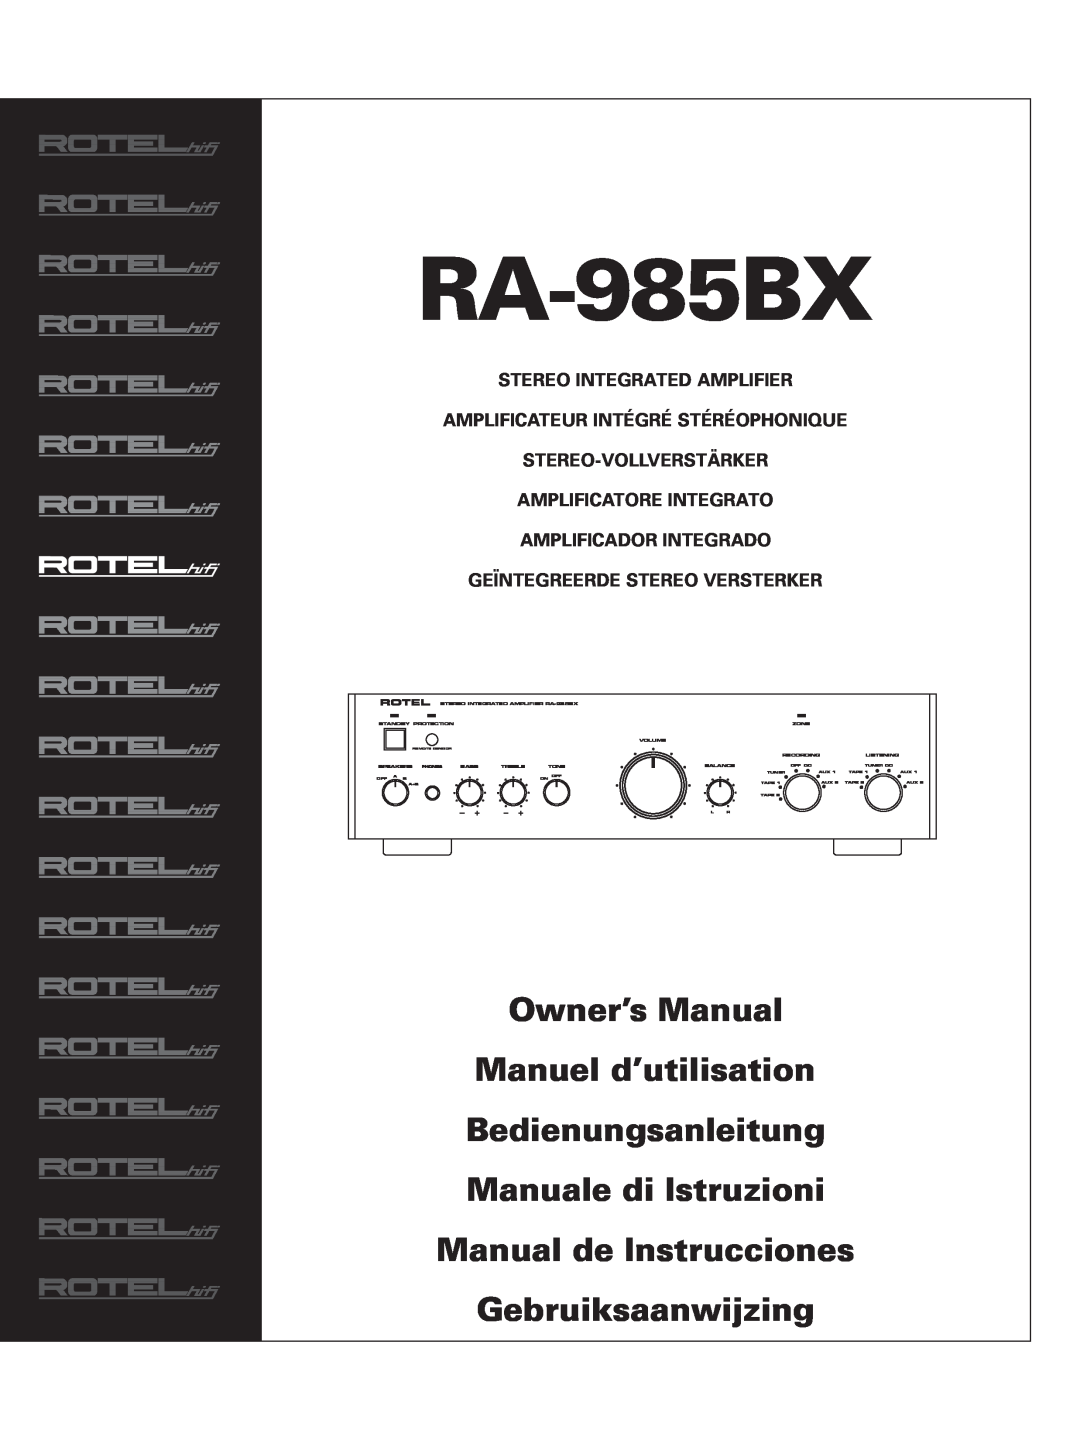 Rotel RA-985BX owner manual Bedienungsanleitung Manuale di Istruzioni, Manual de Instrucciones Gebruiksaanwijzing 